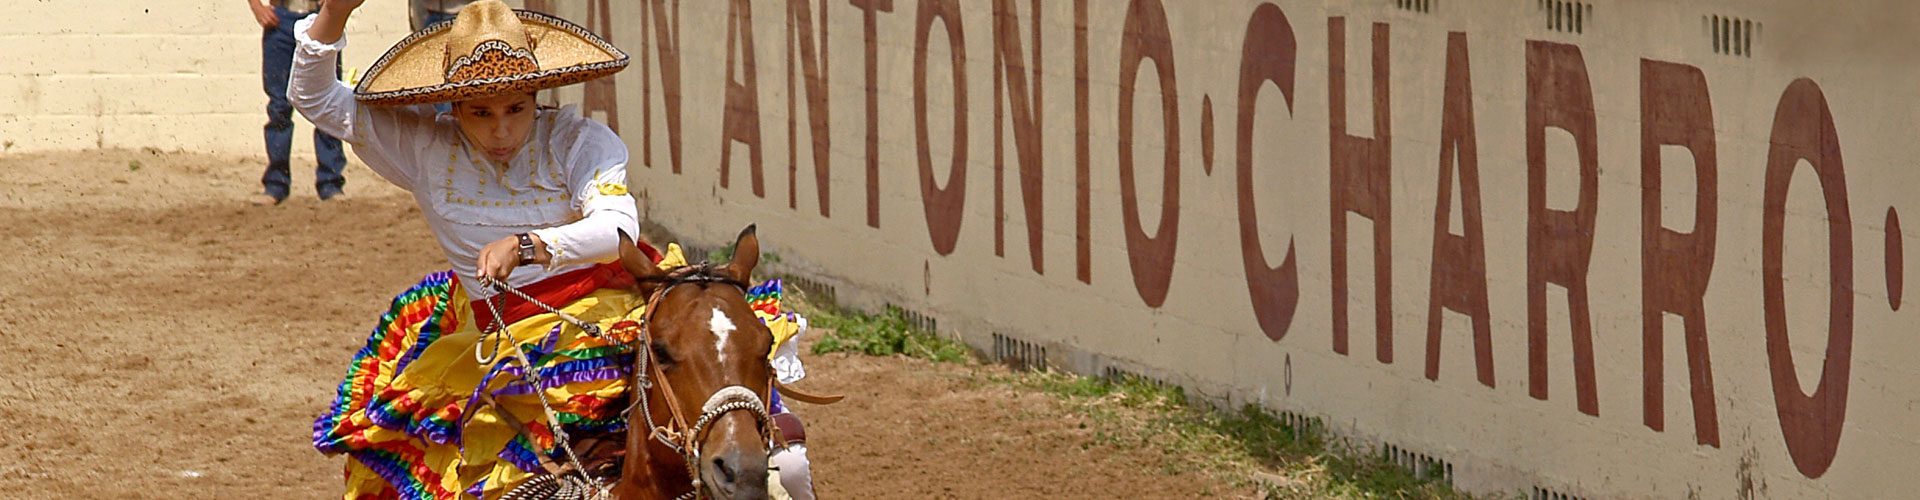 Rodeo Reiter in San Antonio, Texas